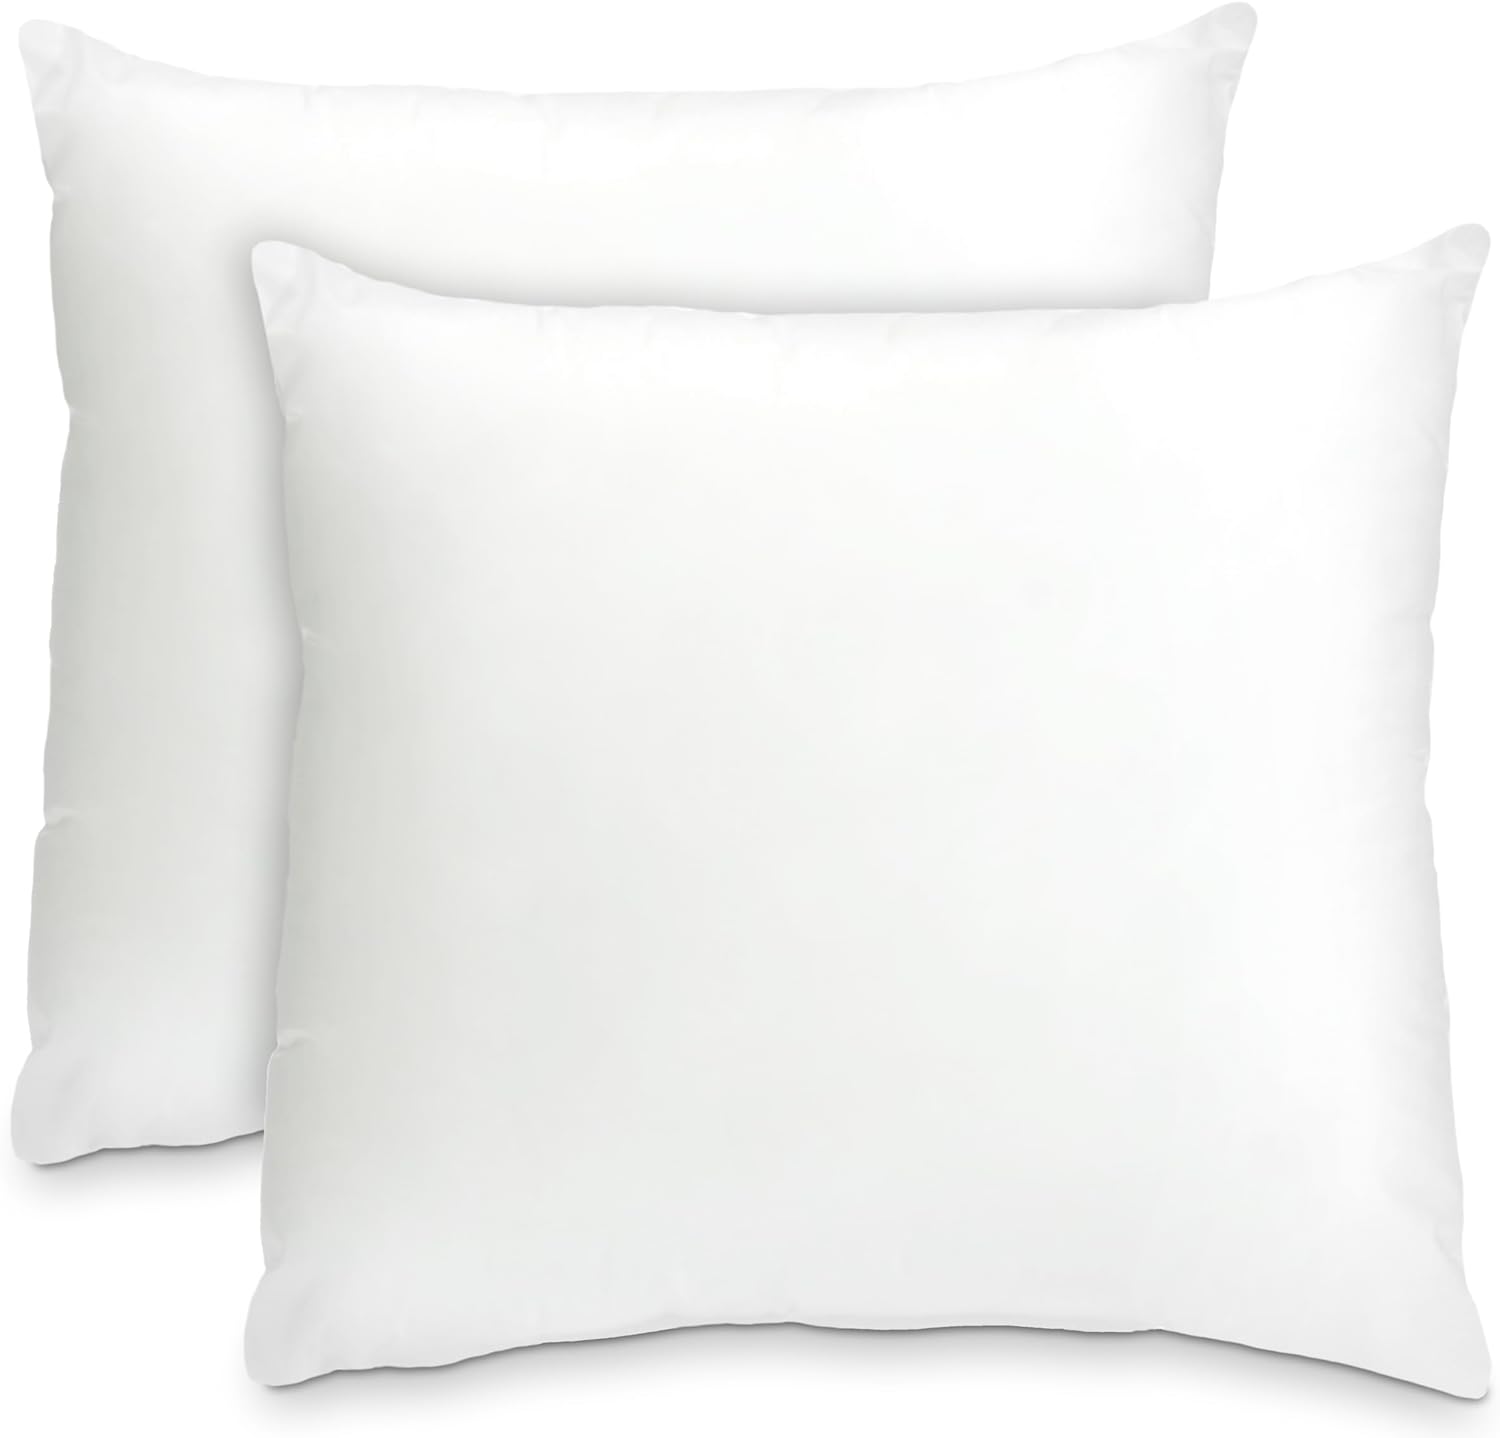 Foamily pillows